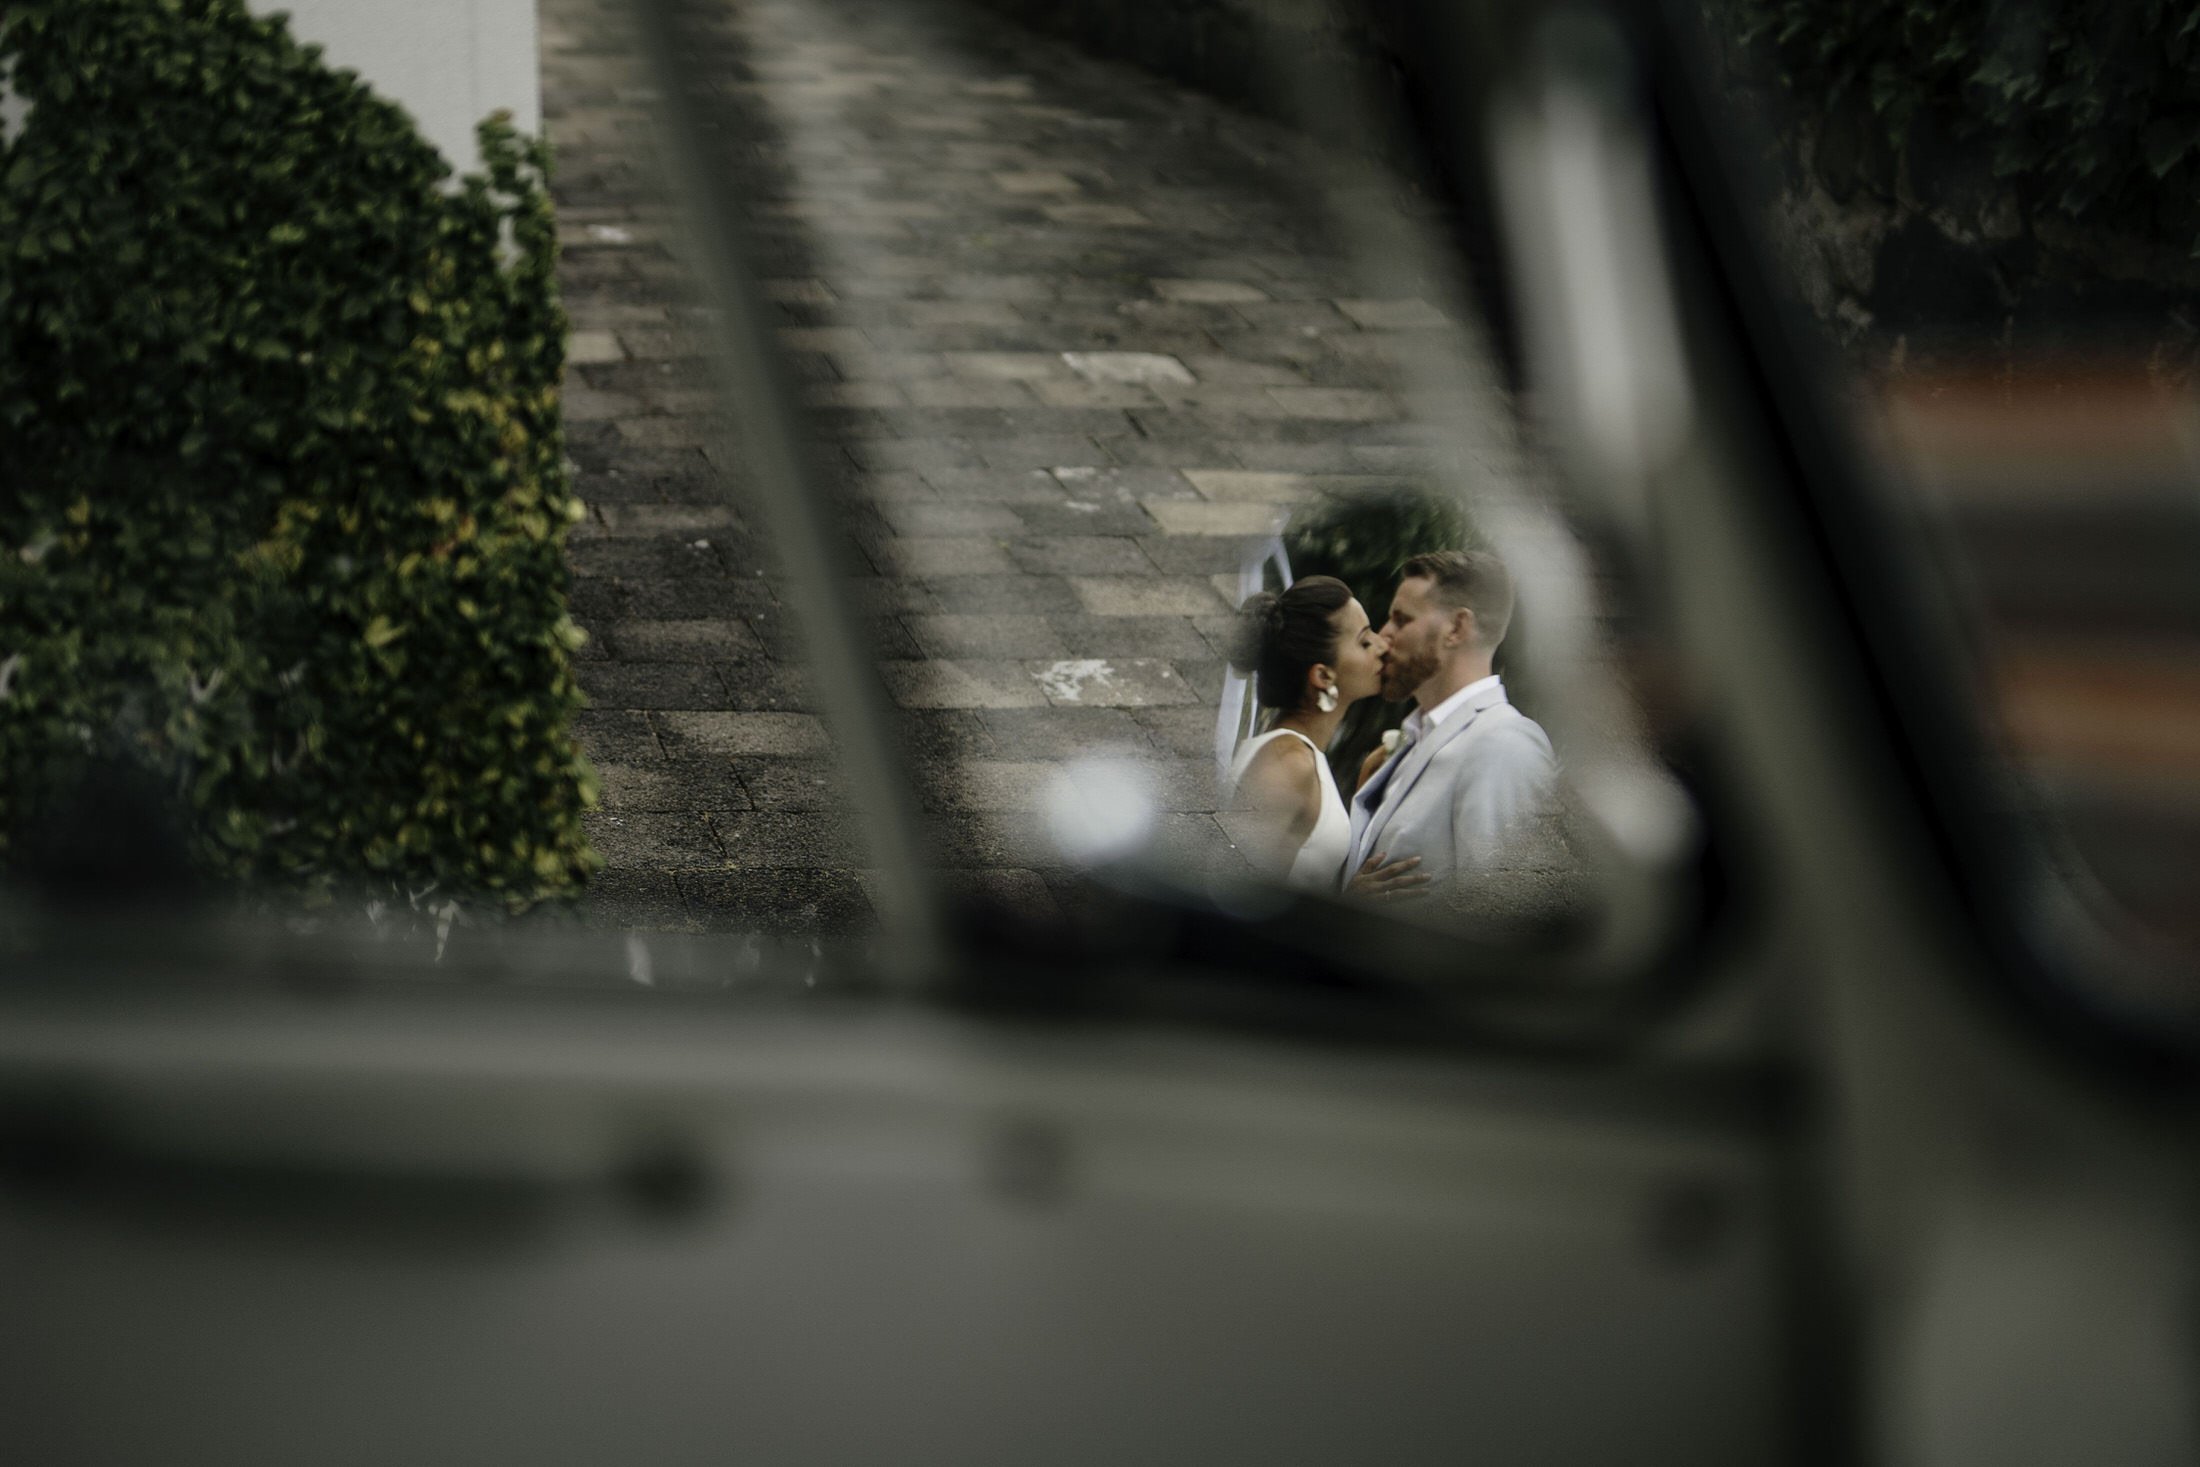 Auckland Wedding Photography &amp; Videography | Luxury Wedding Venue | Garden Wedding | CBD Wedding Venue | DIY Wedding | Pax Wedding